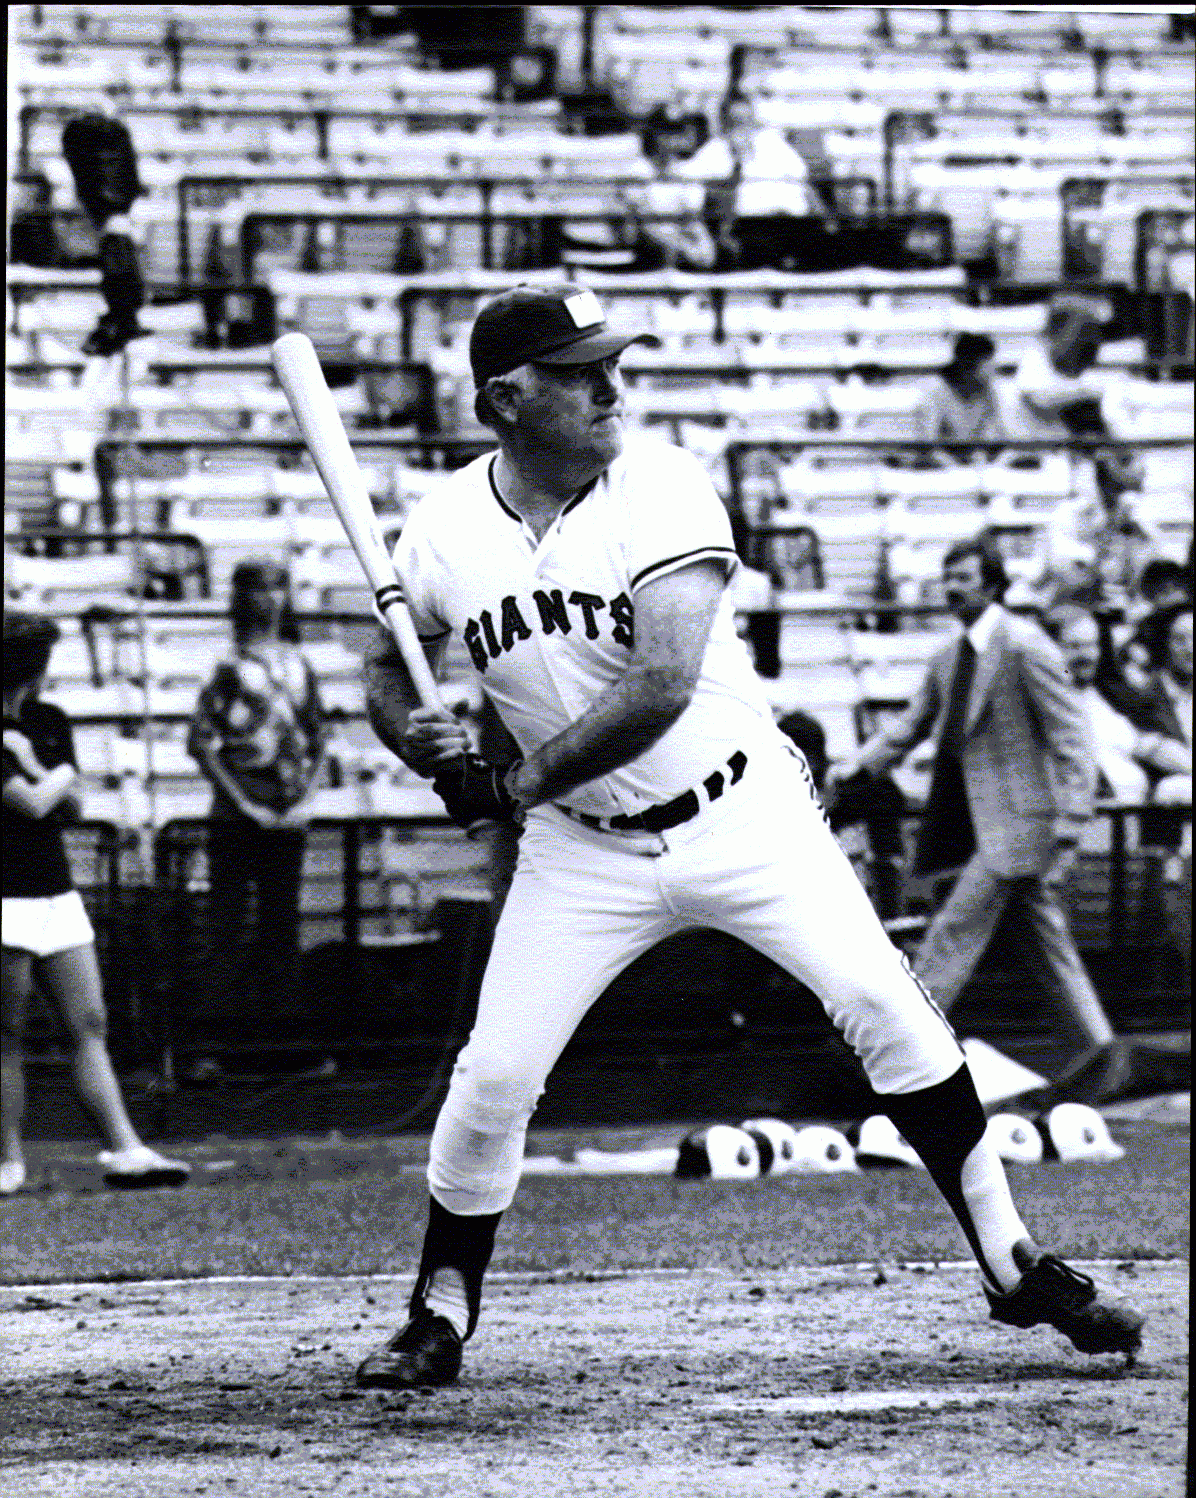 Clausen batting in a San Francisco Giants uniform